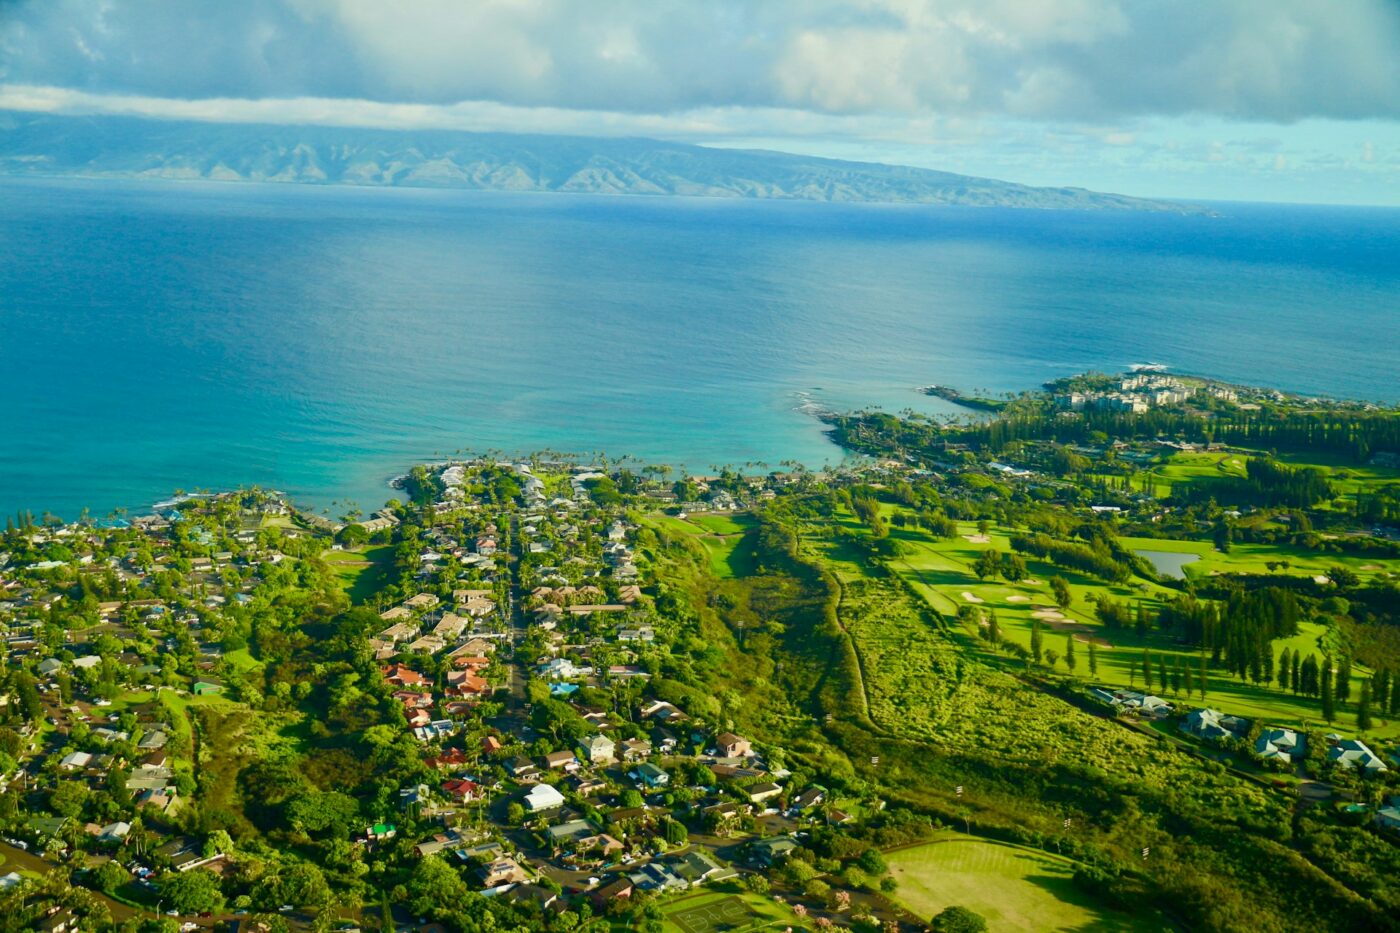 Napili Bay, Maui